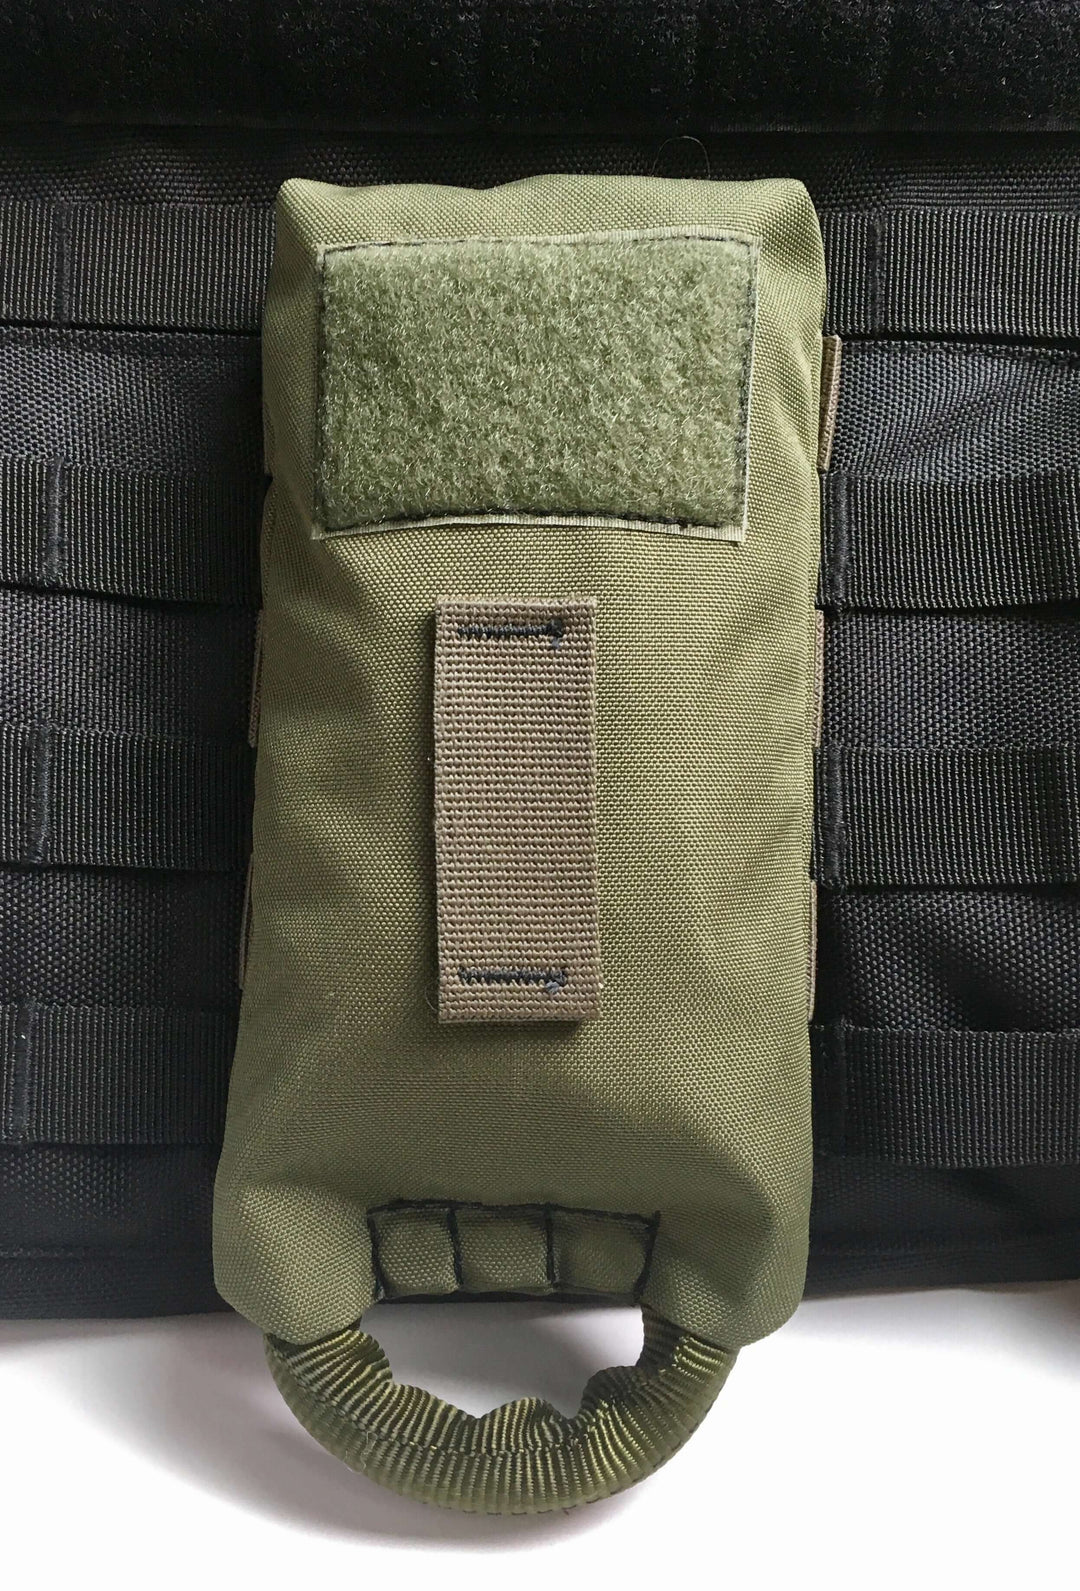 OD Green Tactical Rapid Deployment Bag